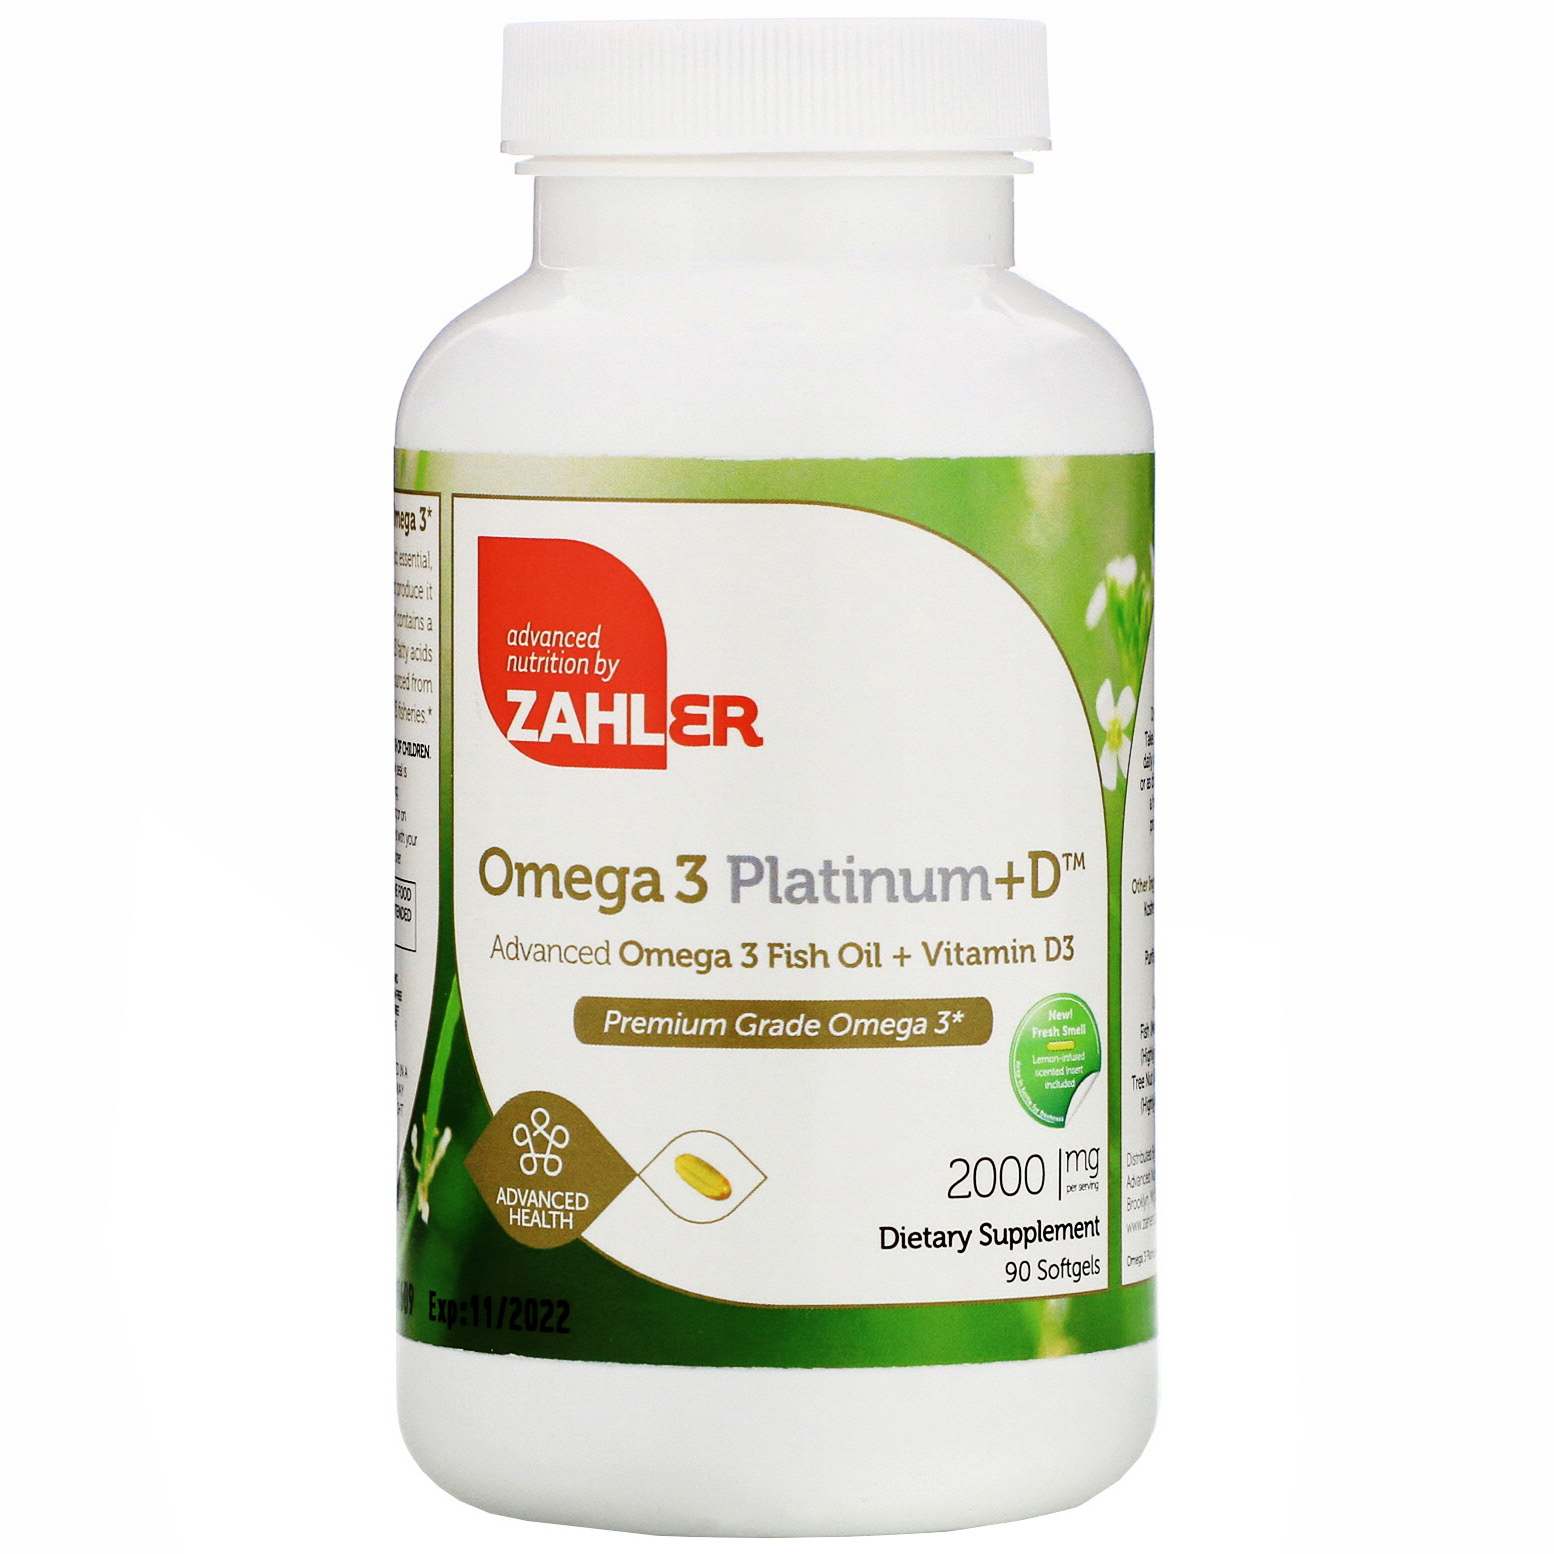 Zahler Omega 3 Platinumd Advanced Omega 3 With Vitamin D3